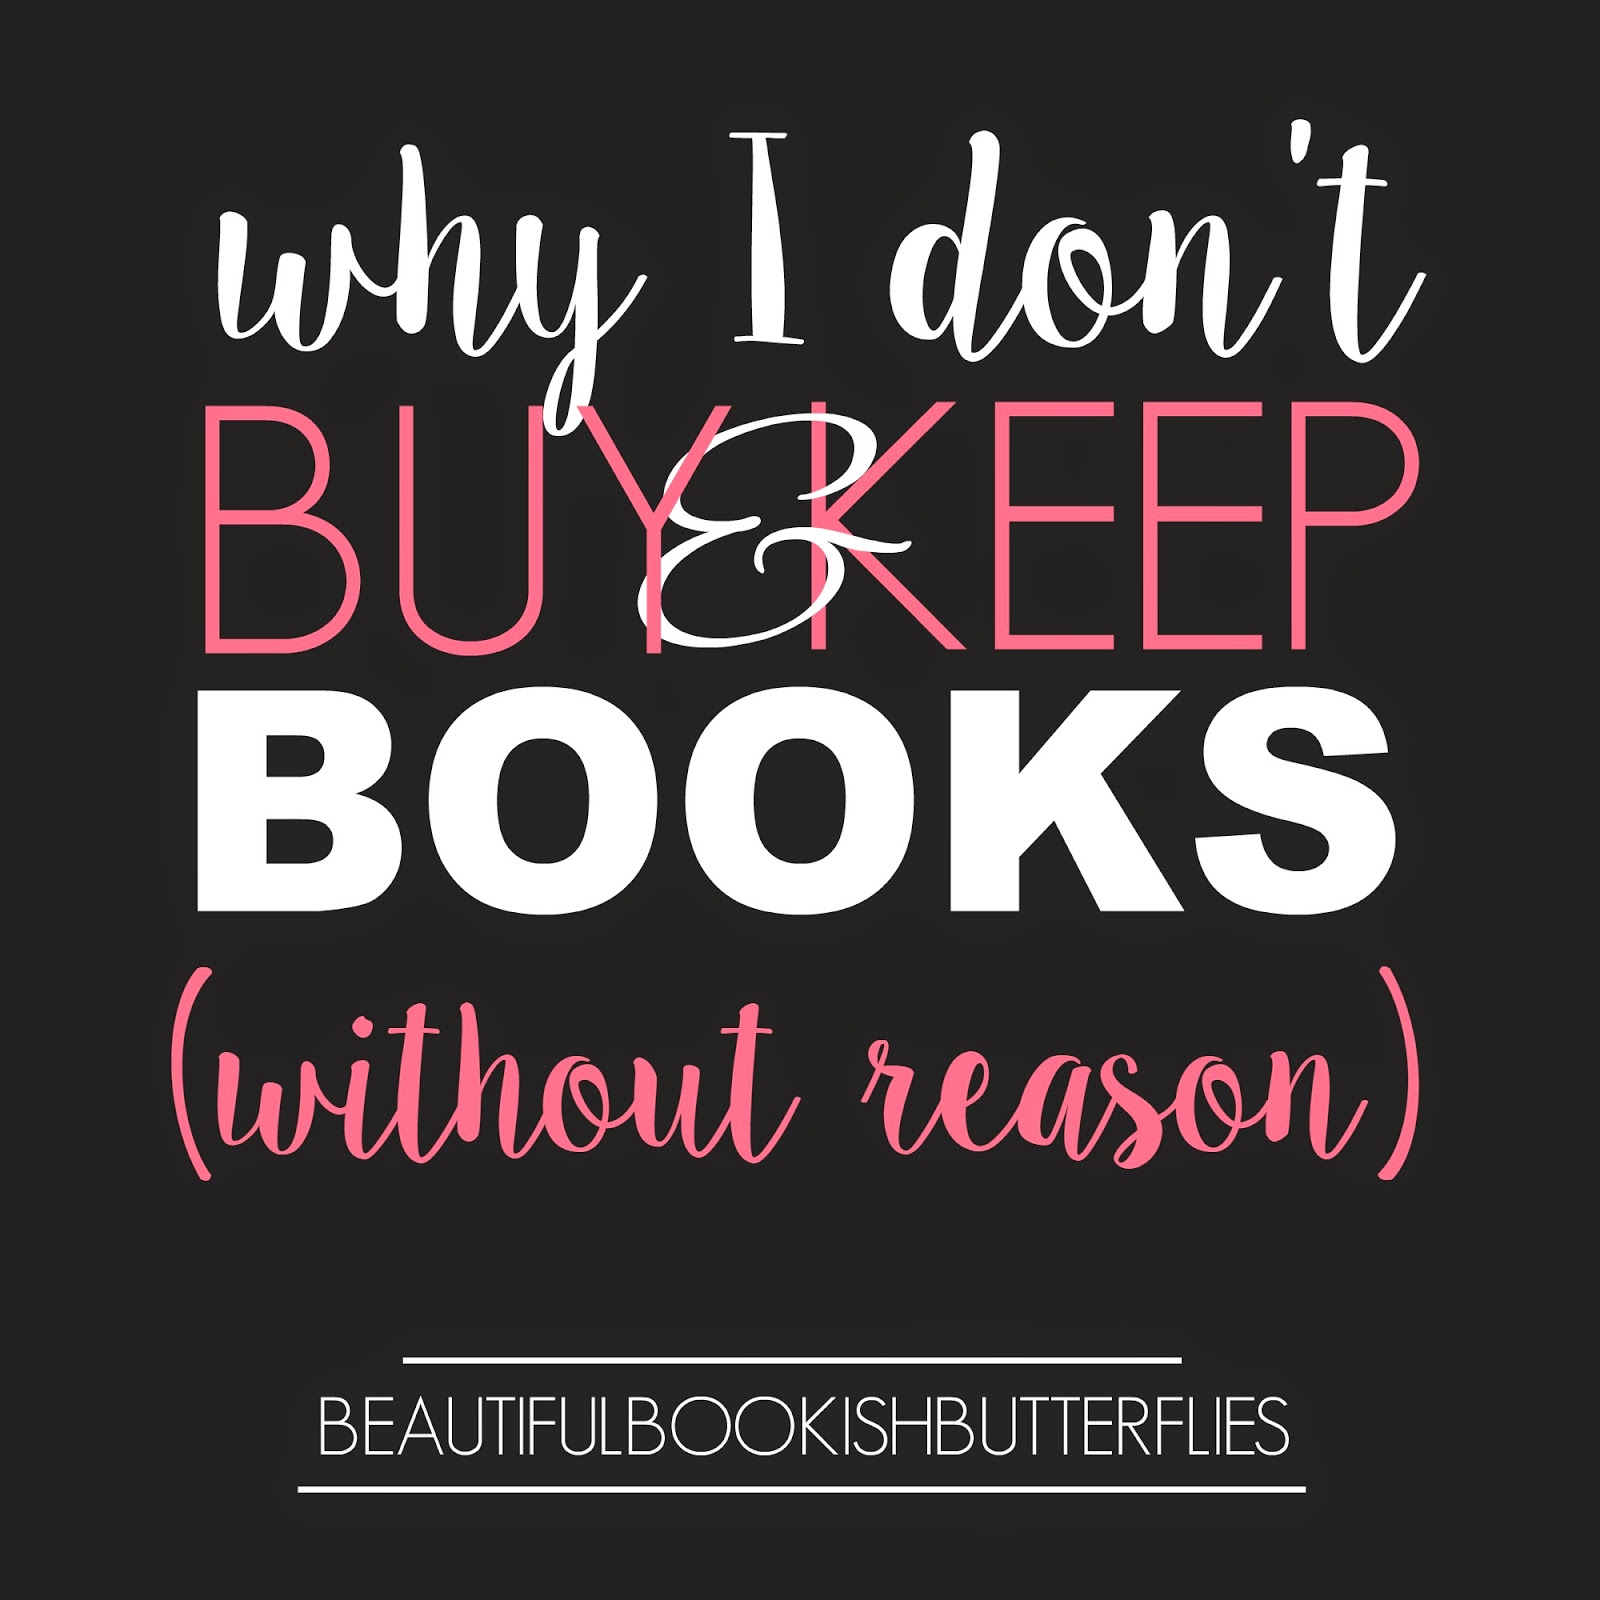 I Don't Keep/Buy Books